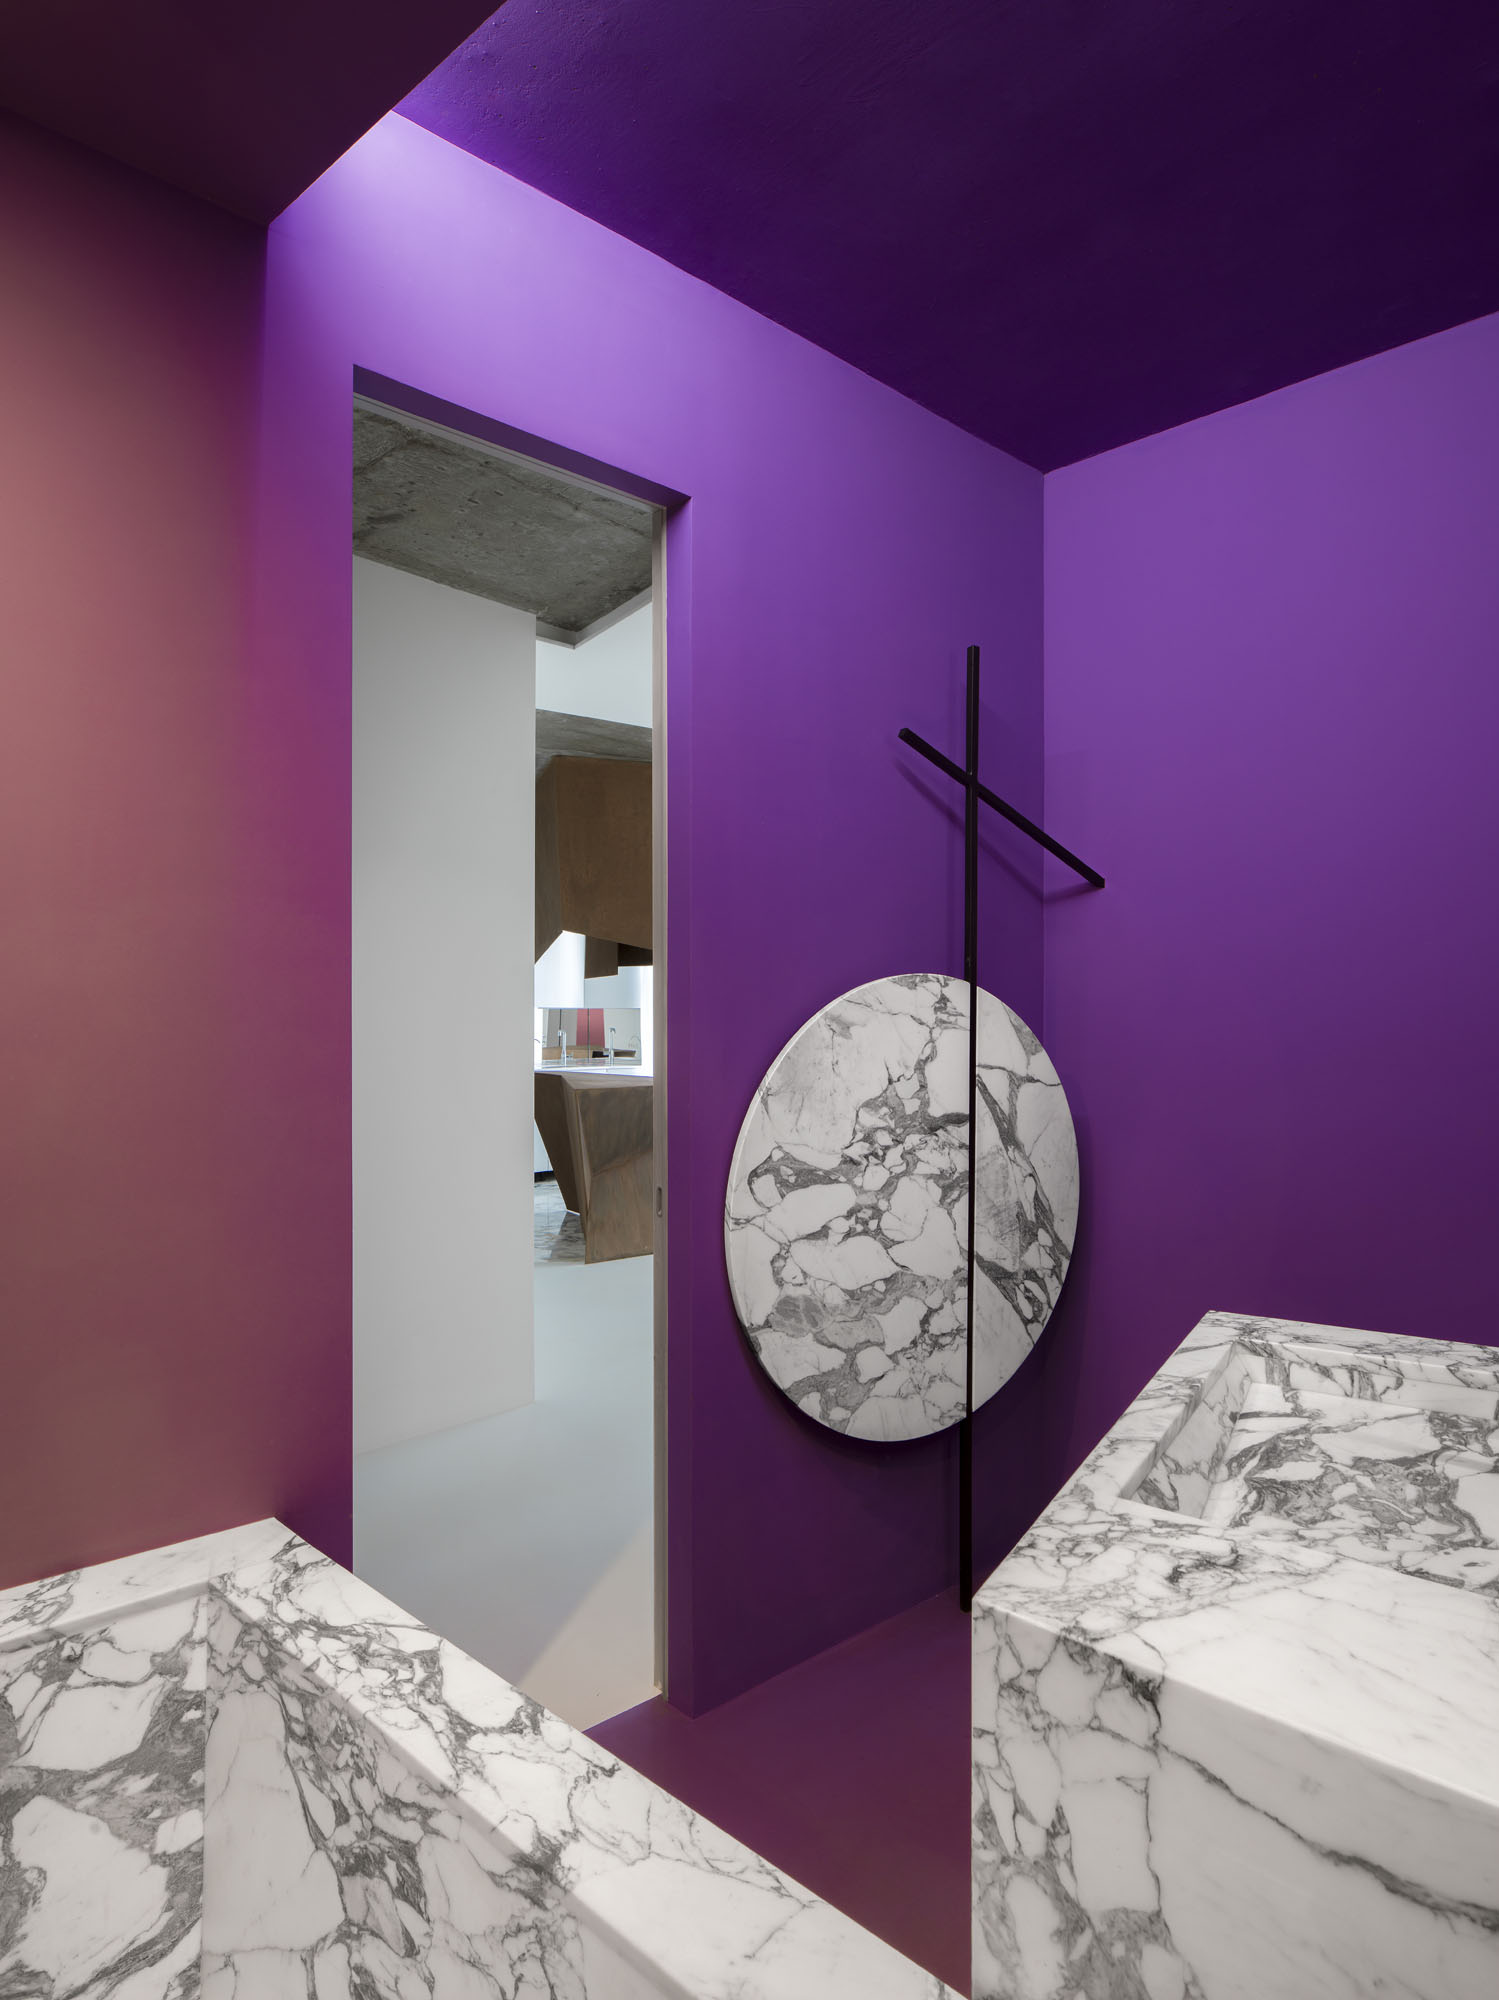 interior of a purple room